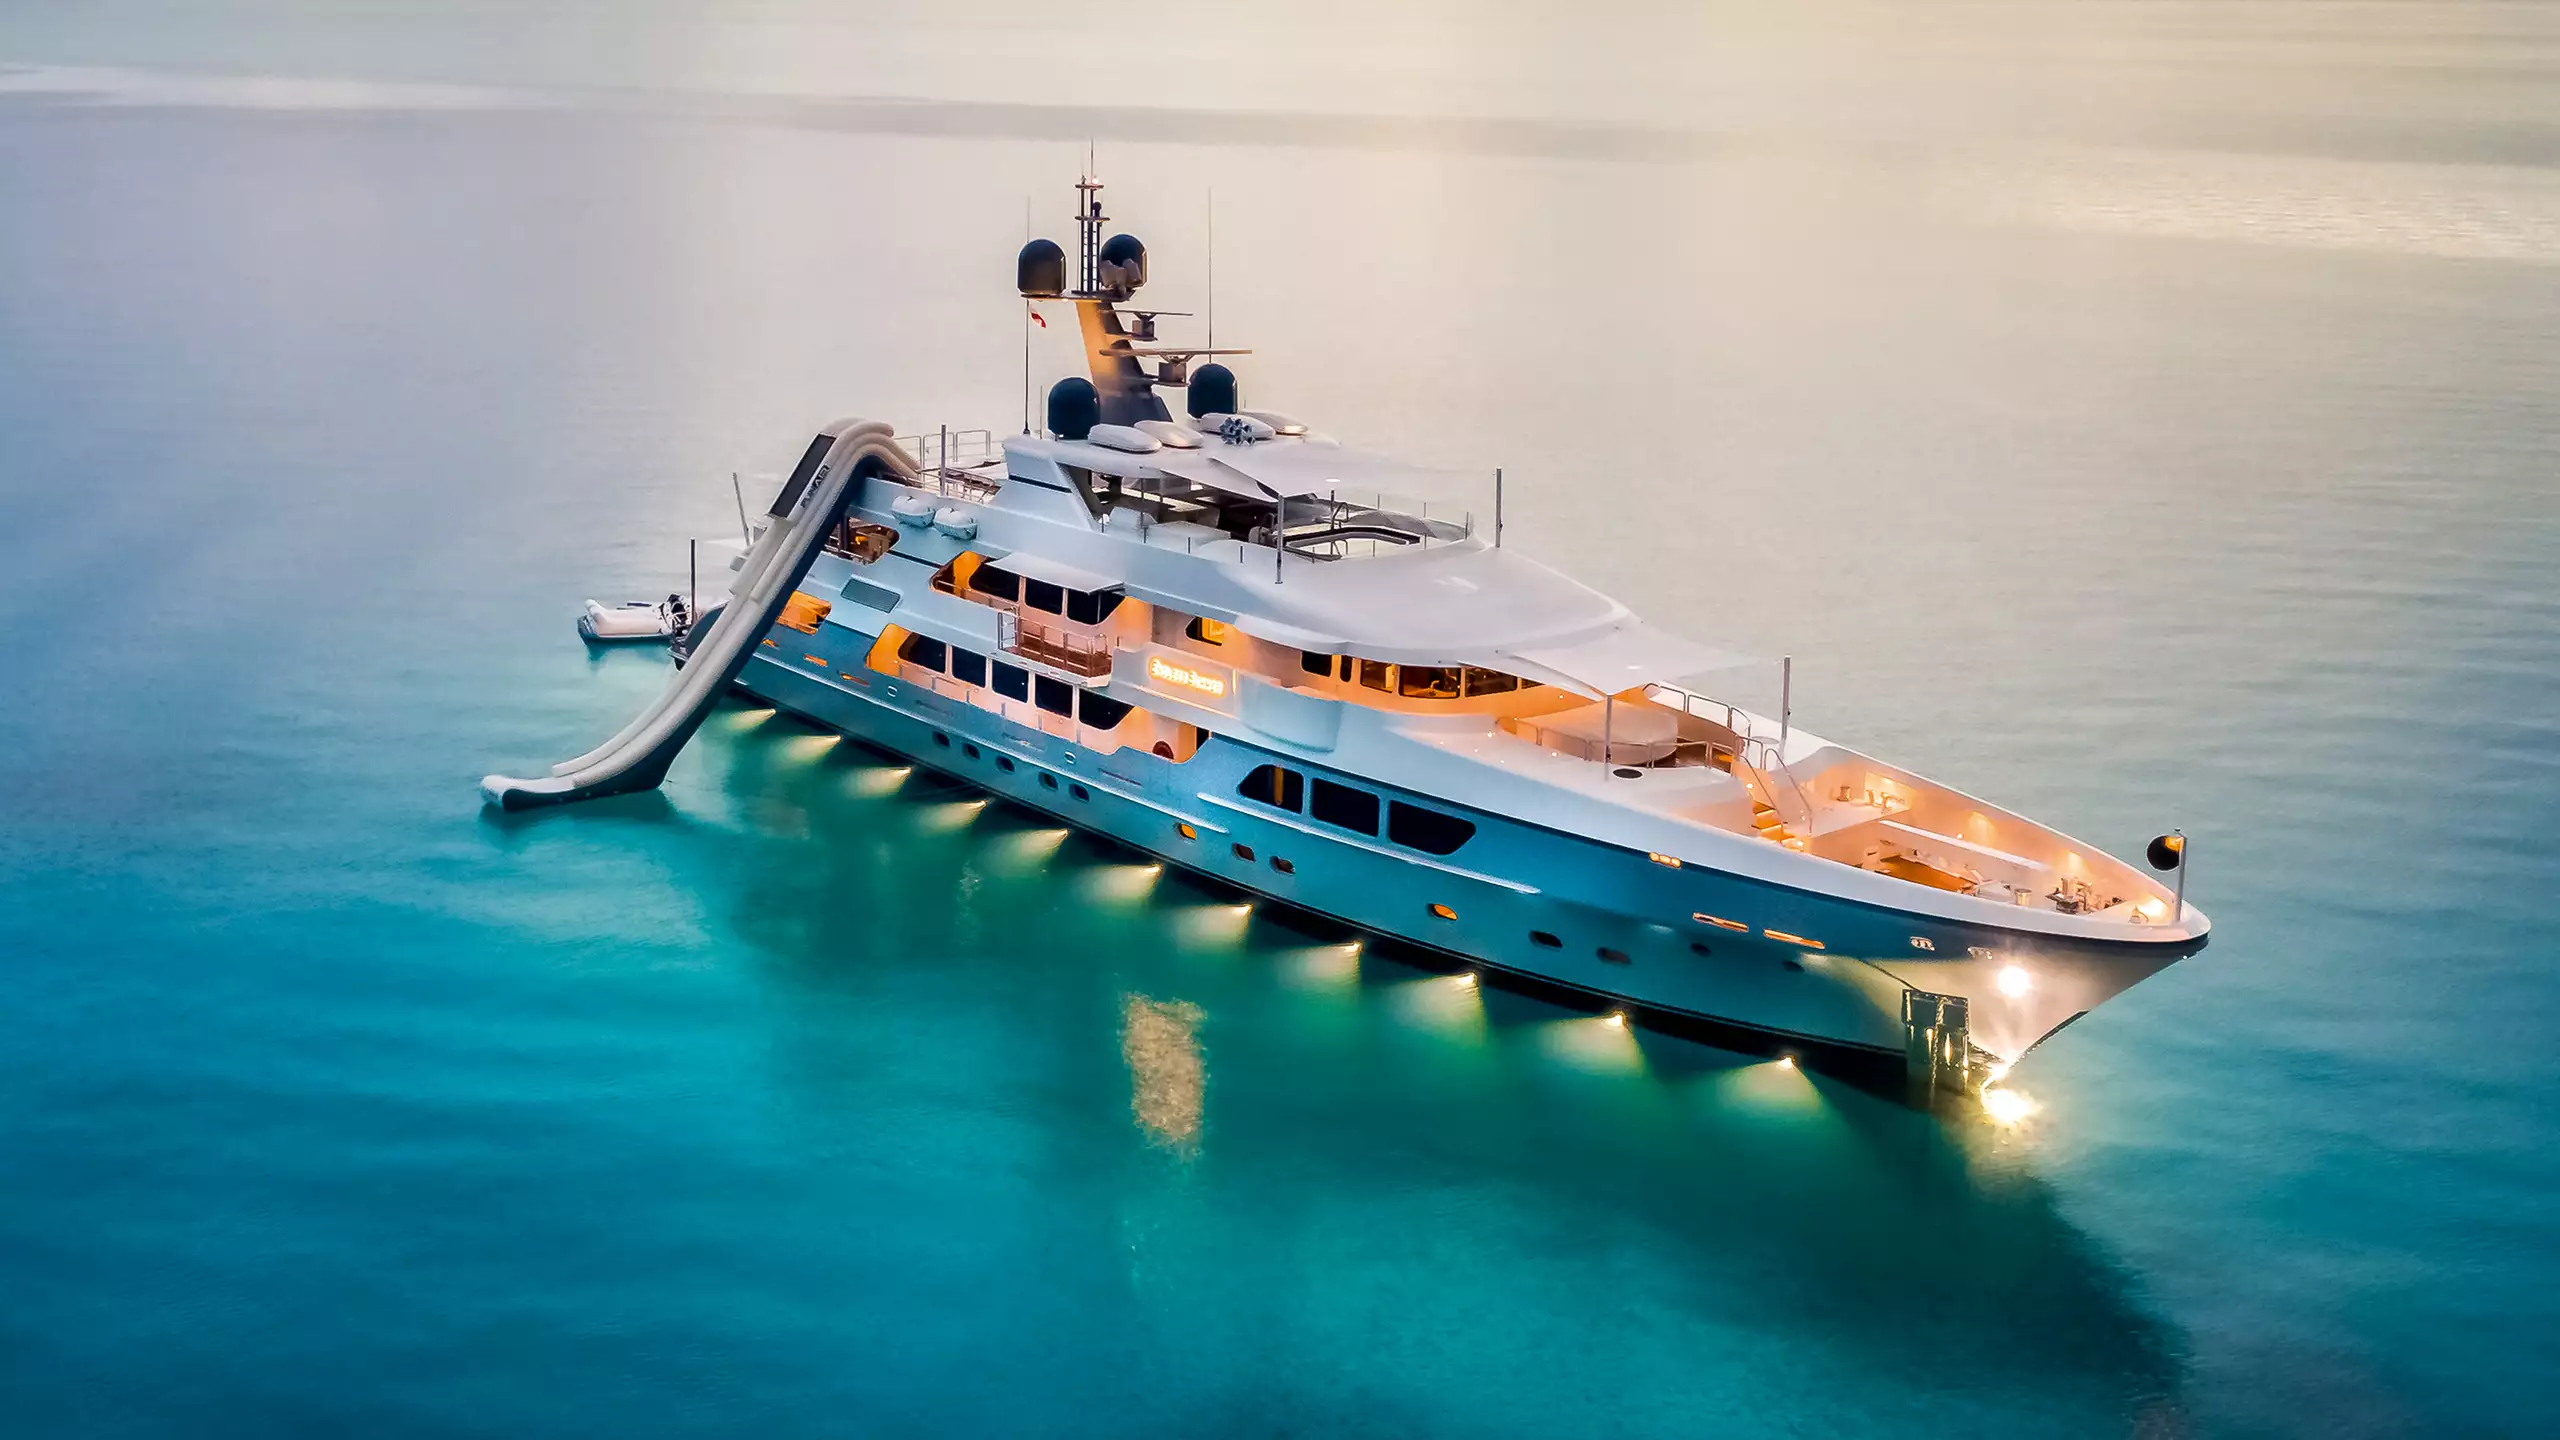 ENDLESS SUMMER Yacht • Jeffrey Hines $33M Superyacht